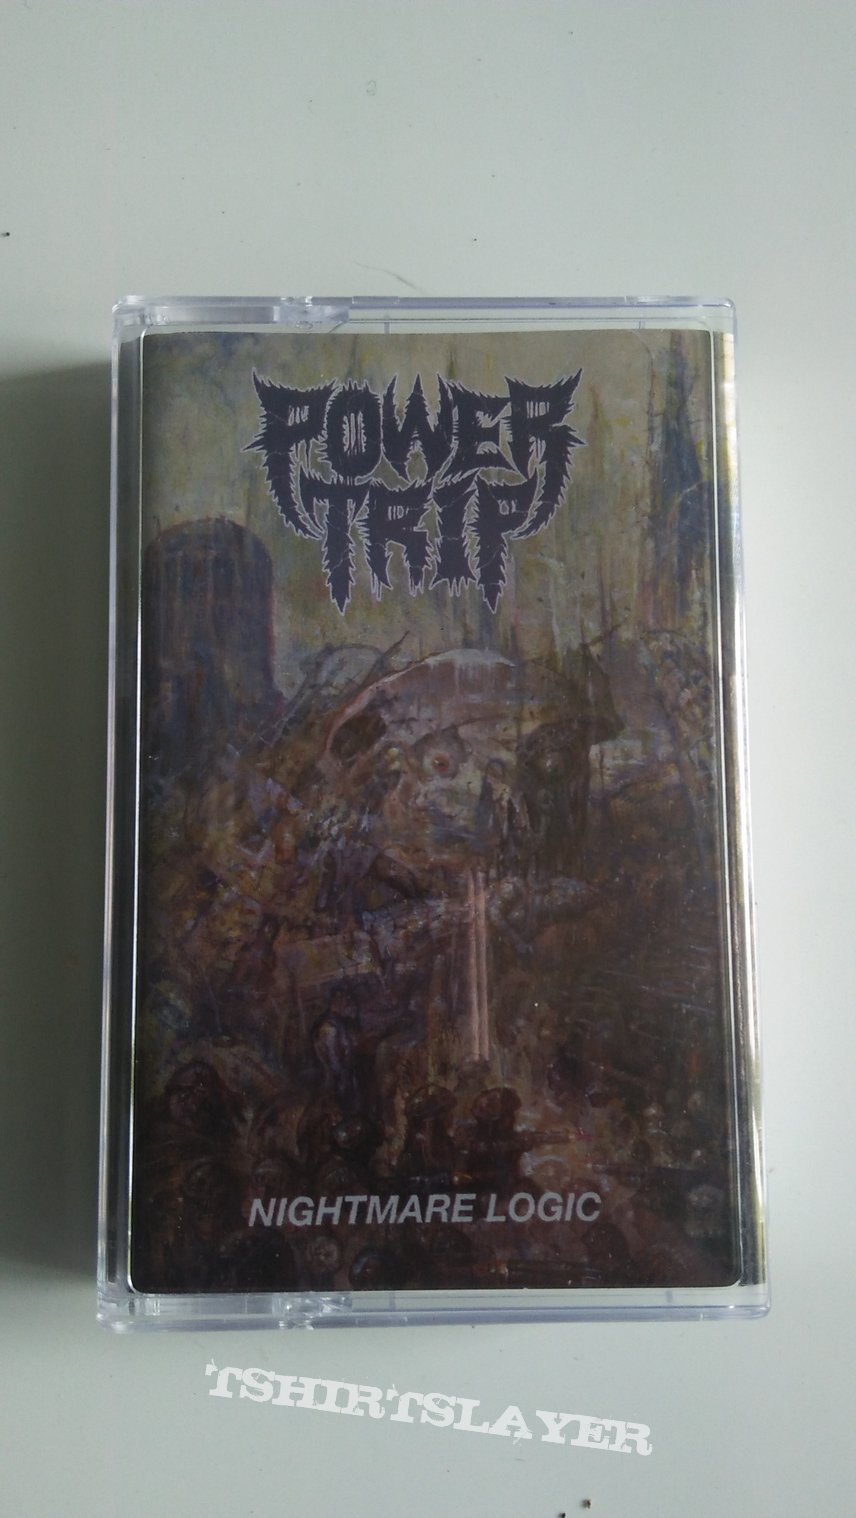 Power Trip - Nightmare Logic tape